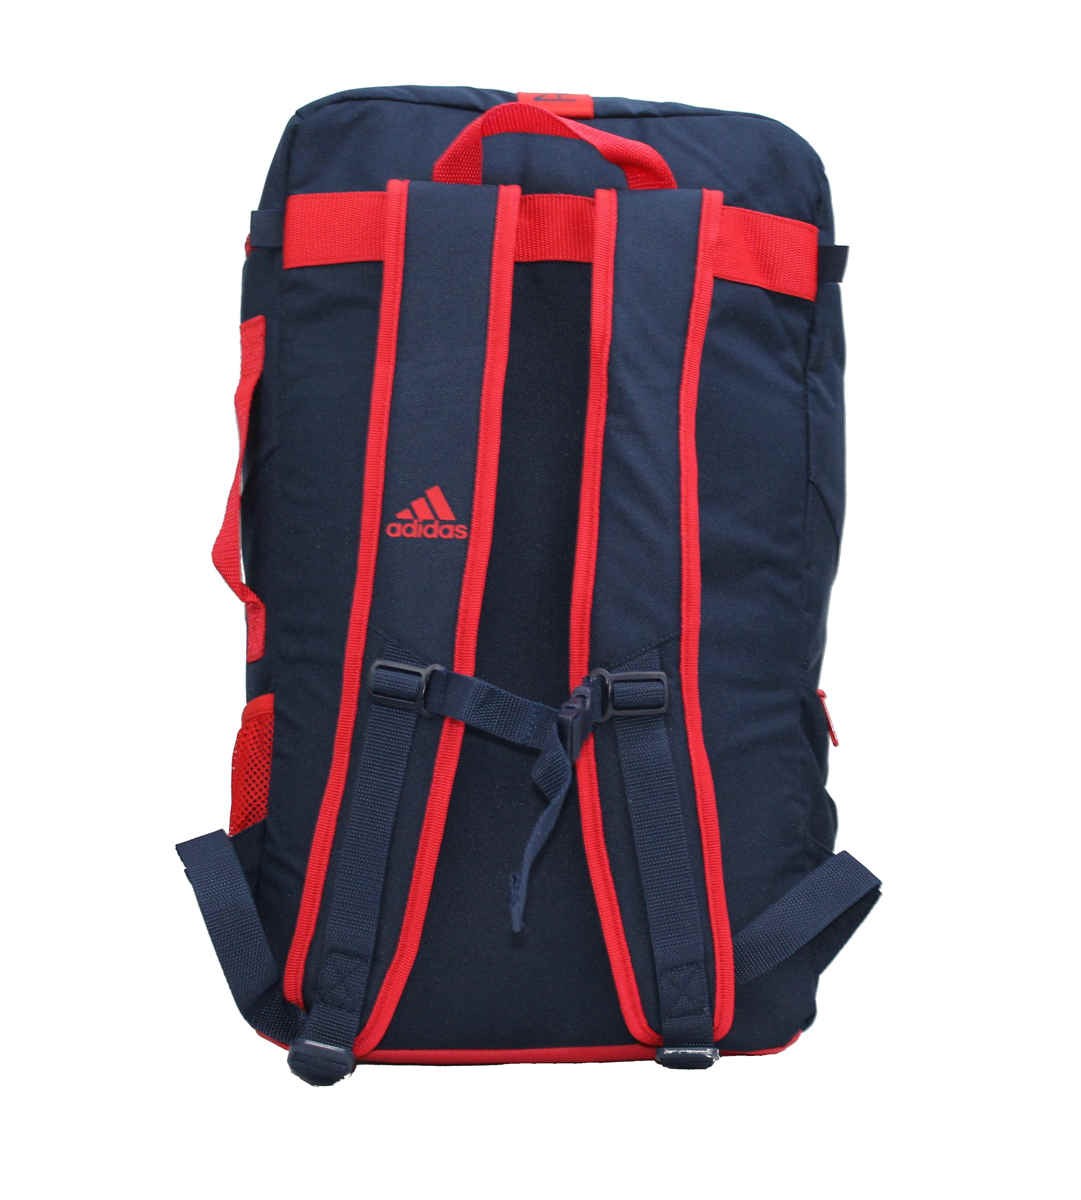 Adidas backpack Sport BackPack Karate blue